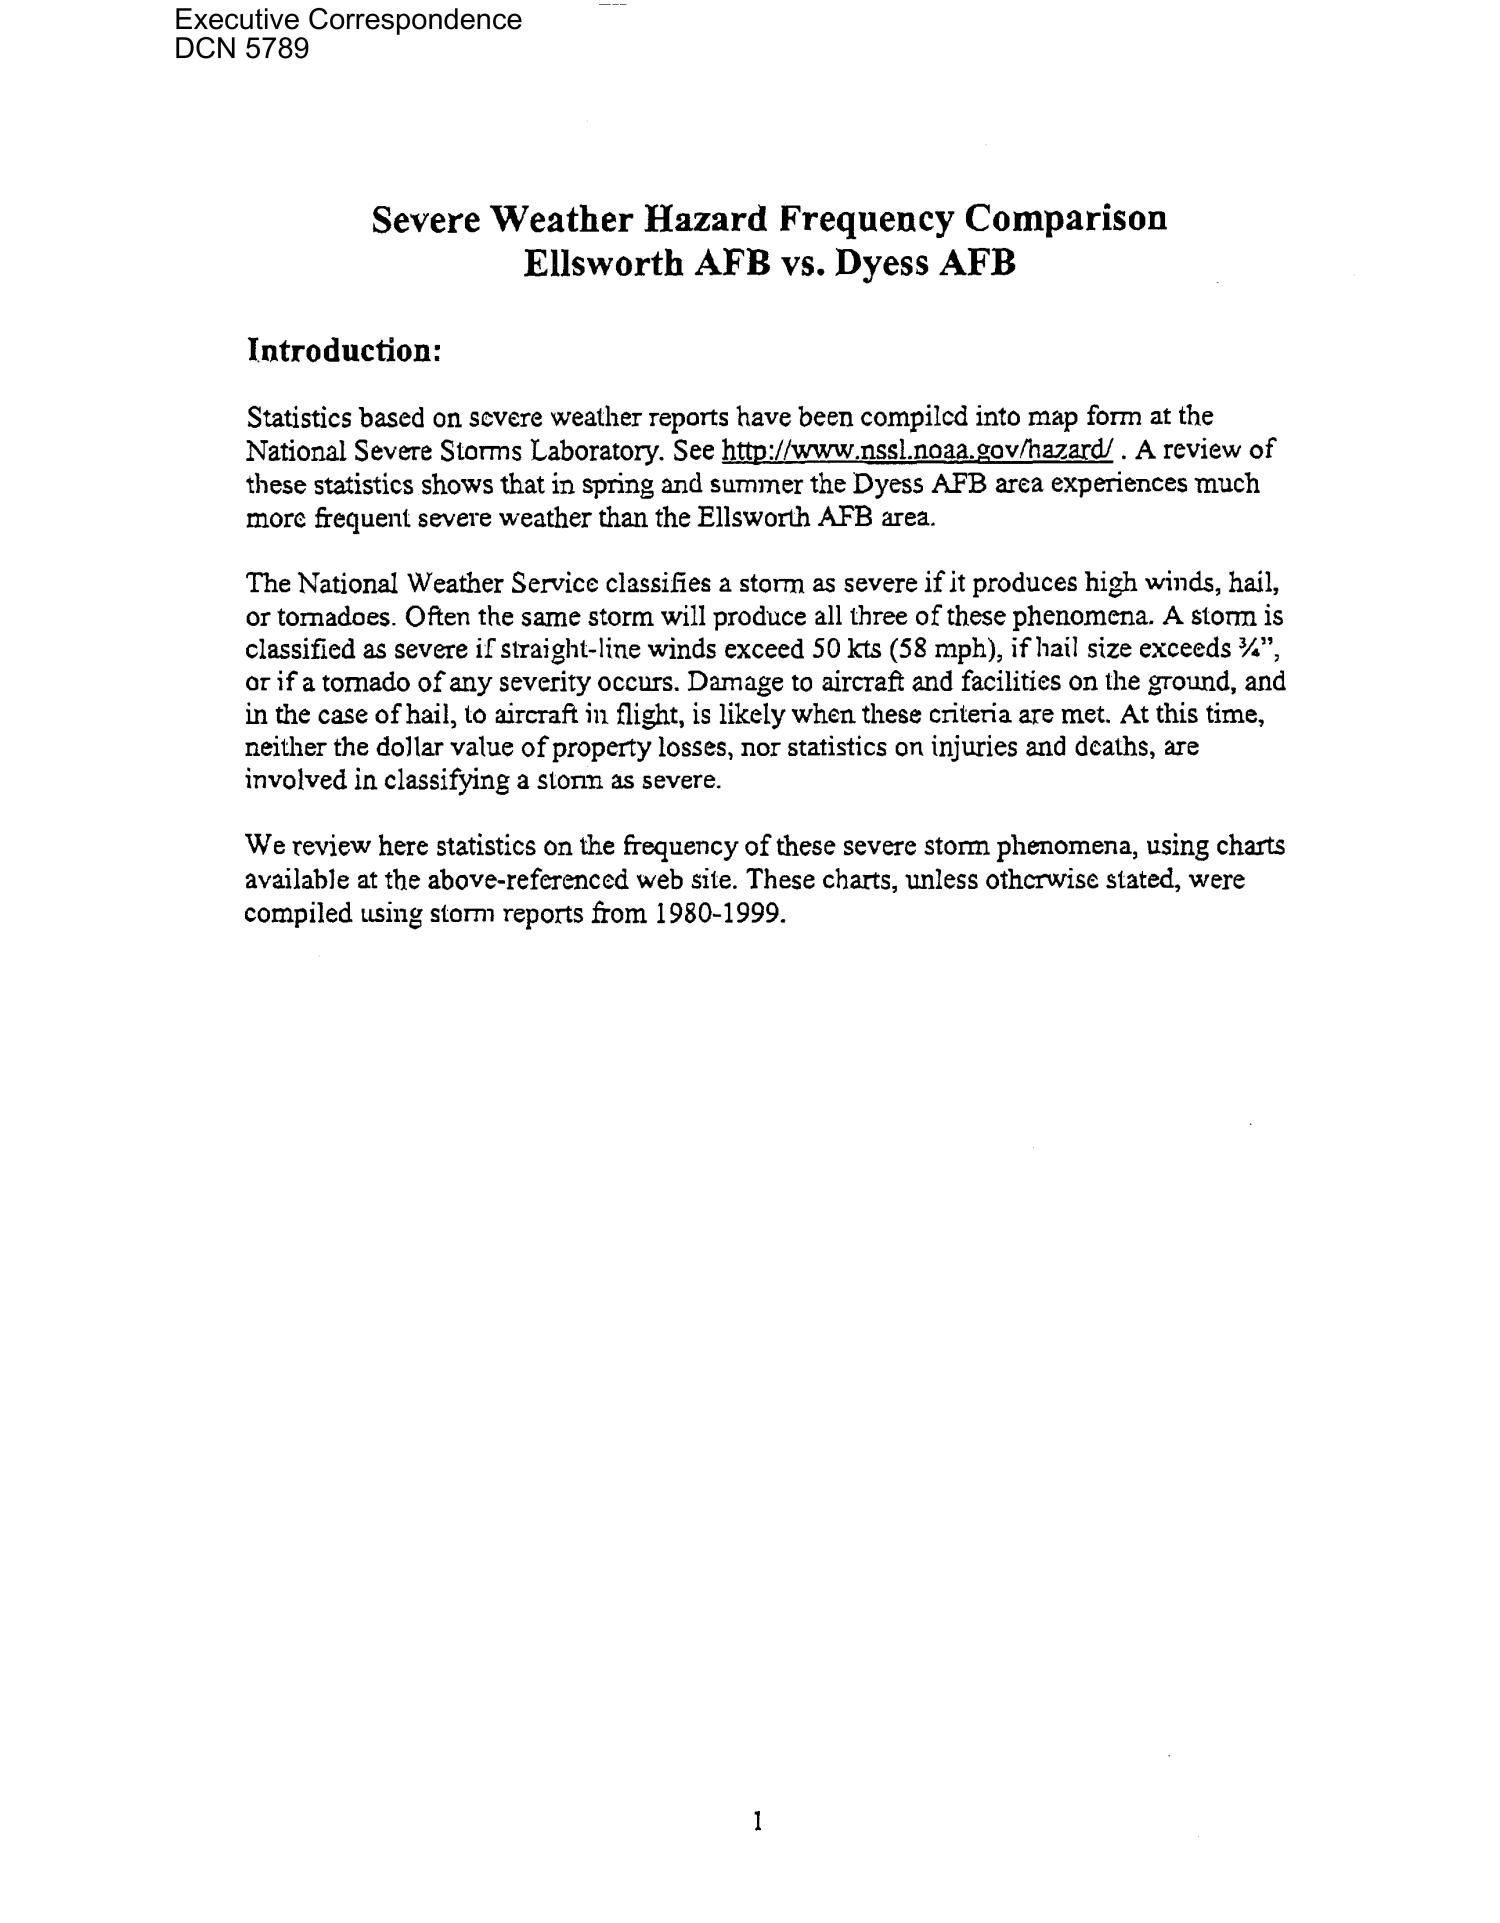 Executive Correspondence – Letter dtd 07/29/2005 to Chairman Principi from Senators Tim Johnson, John Thune, and Representative Stephanie Herseth
                                                
                                                    [Sequence #]: 4 of 20
                                                